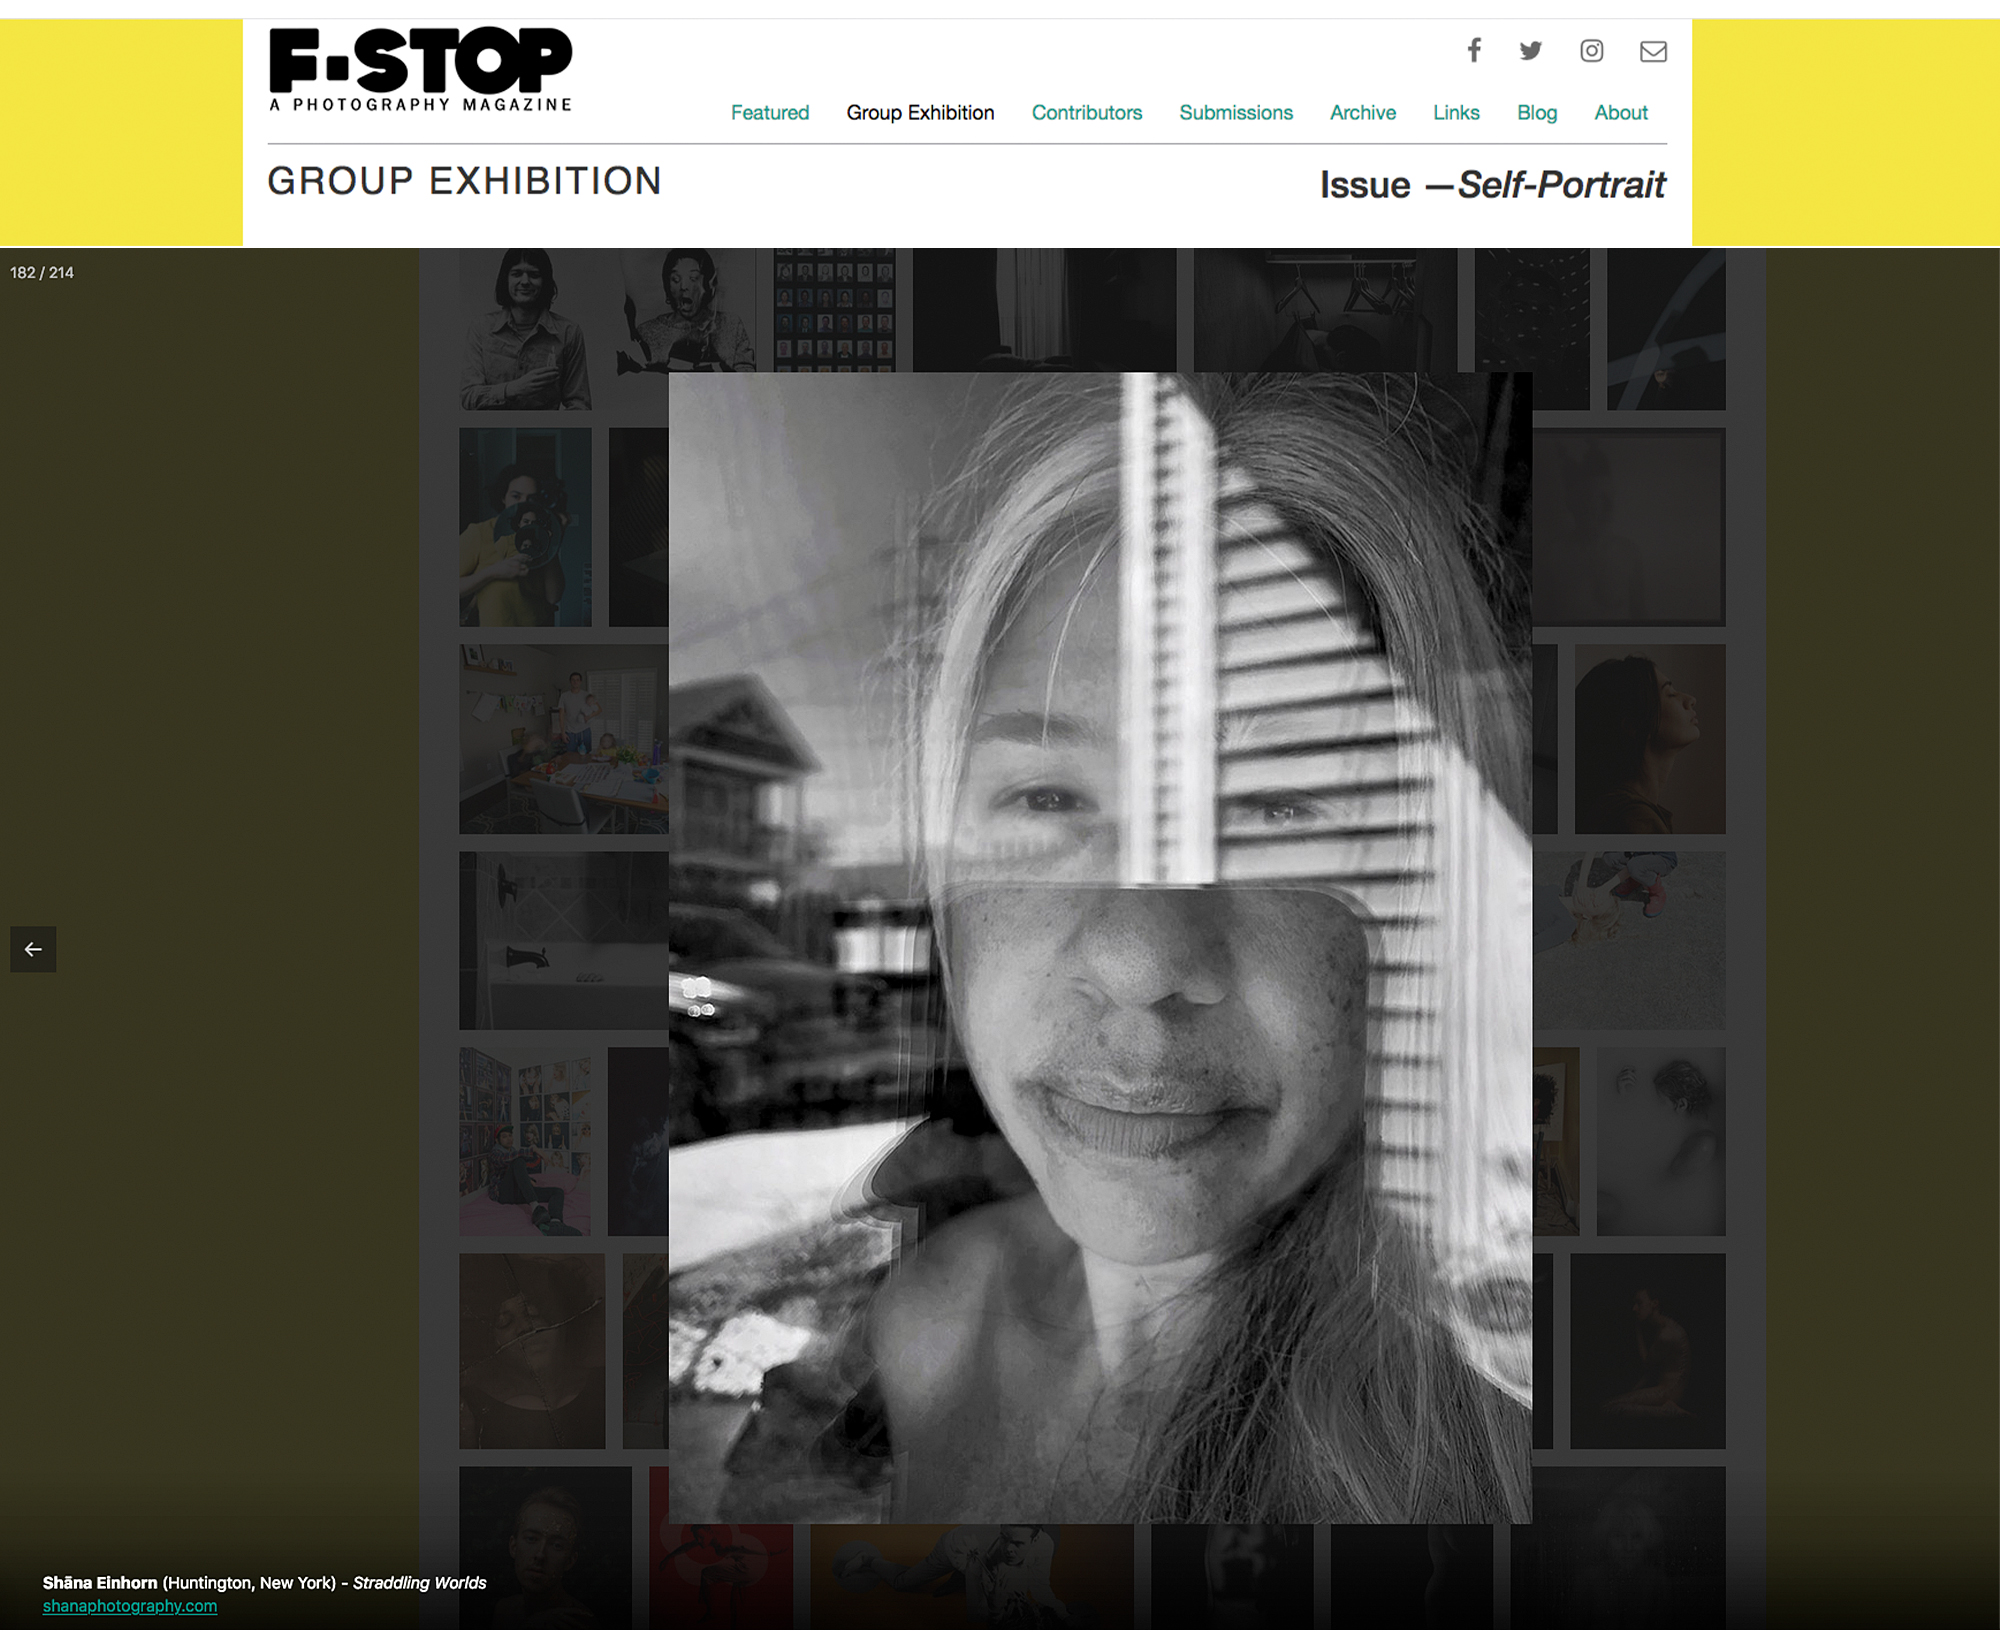 F-STOP Magazine Self-Portrait Exhibition